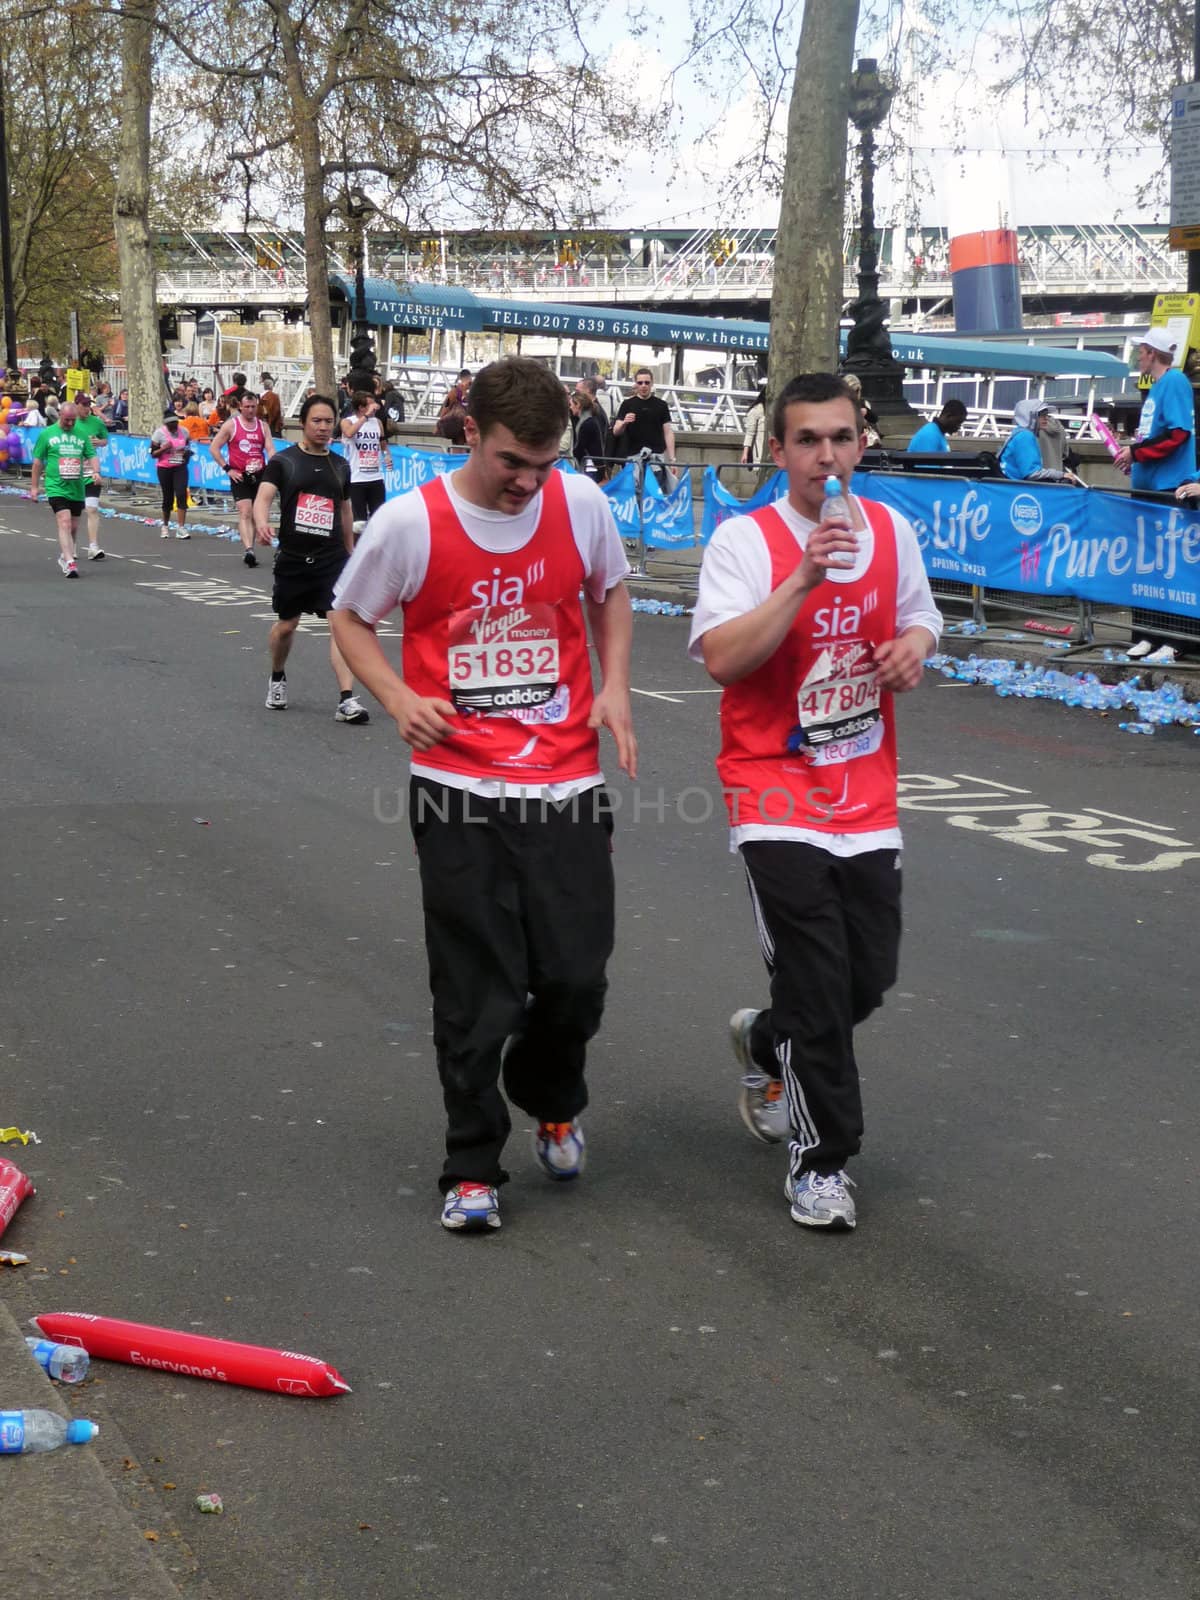 London - April 25: Runners at the 2010 London Marathon  April 25th, 2010 in London.